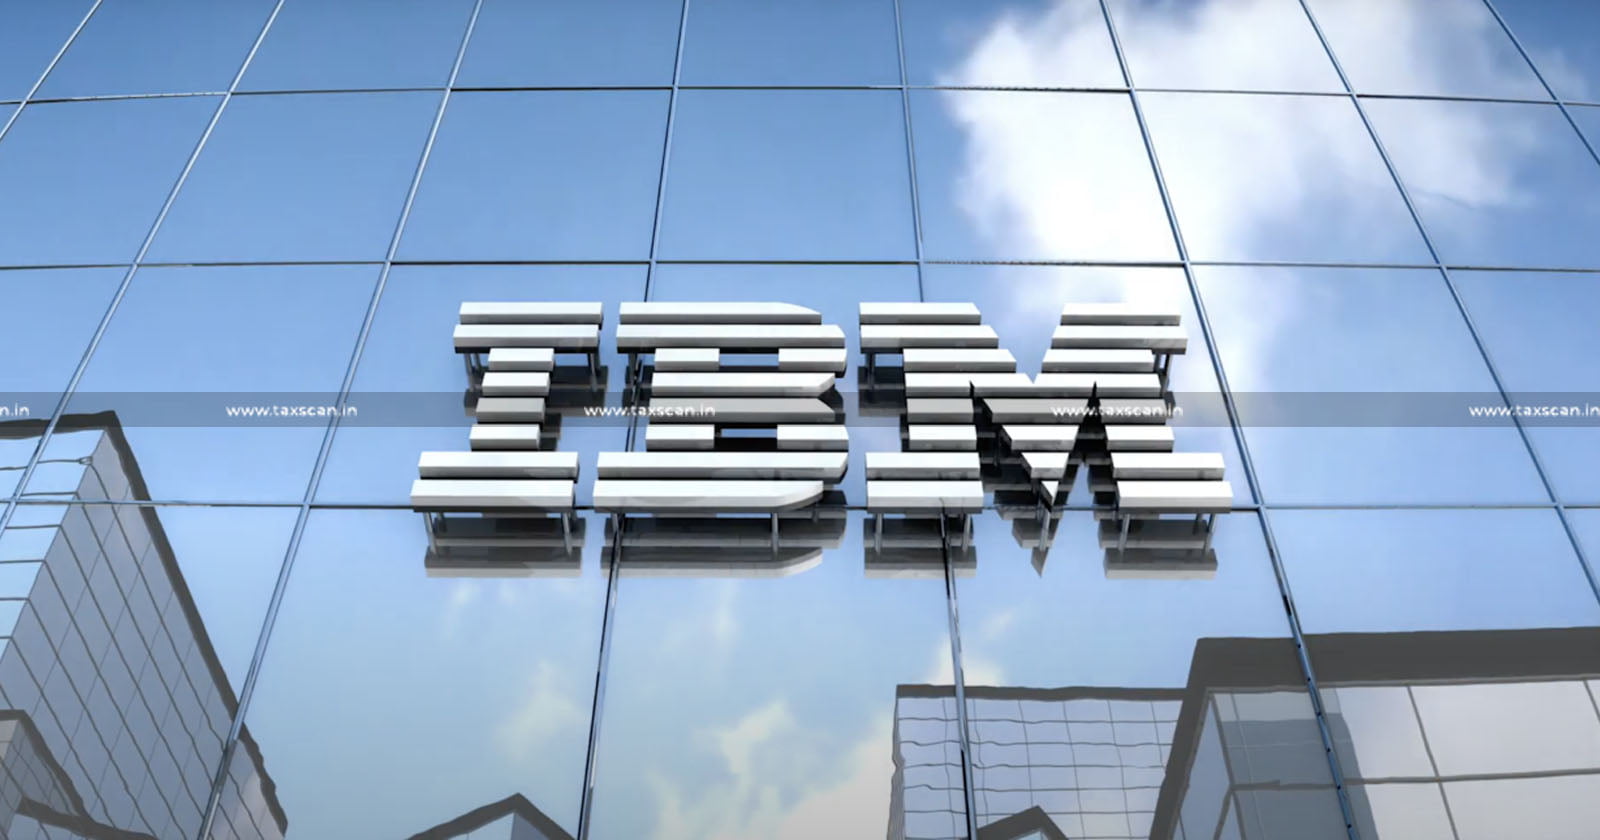 B. Com Vacancy in IBM - B. Com - Vacancy in IBM - IBM - Vacancy - Taxscan - Jobscan